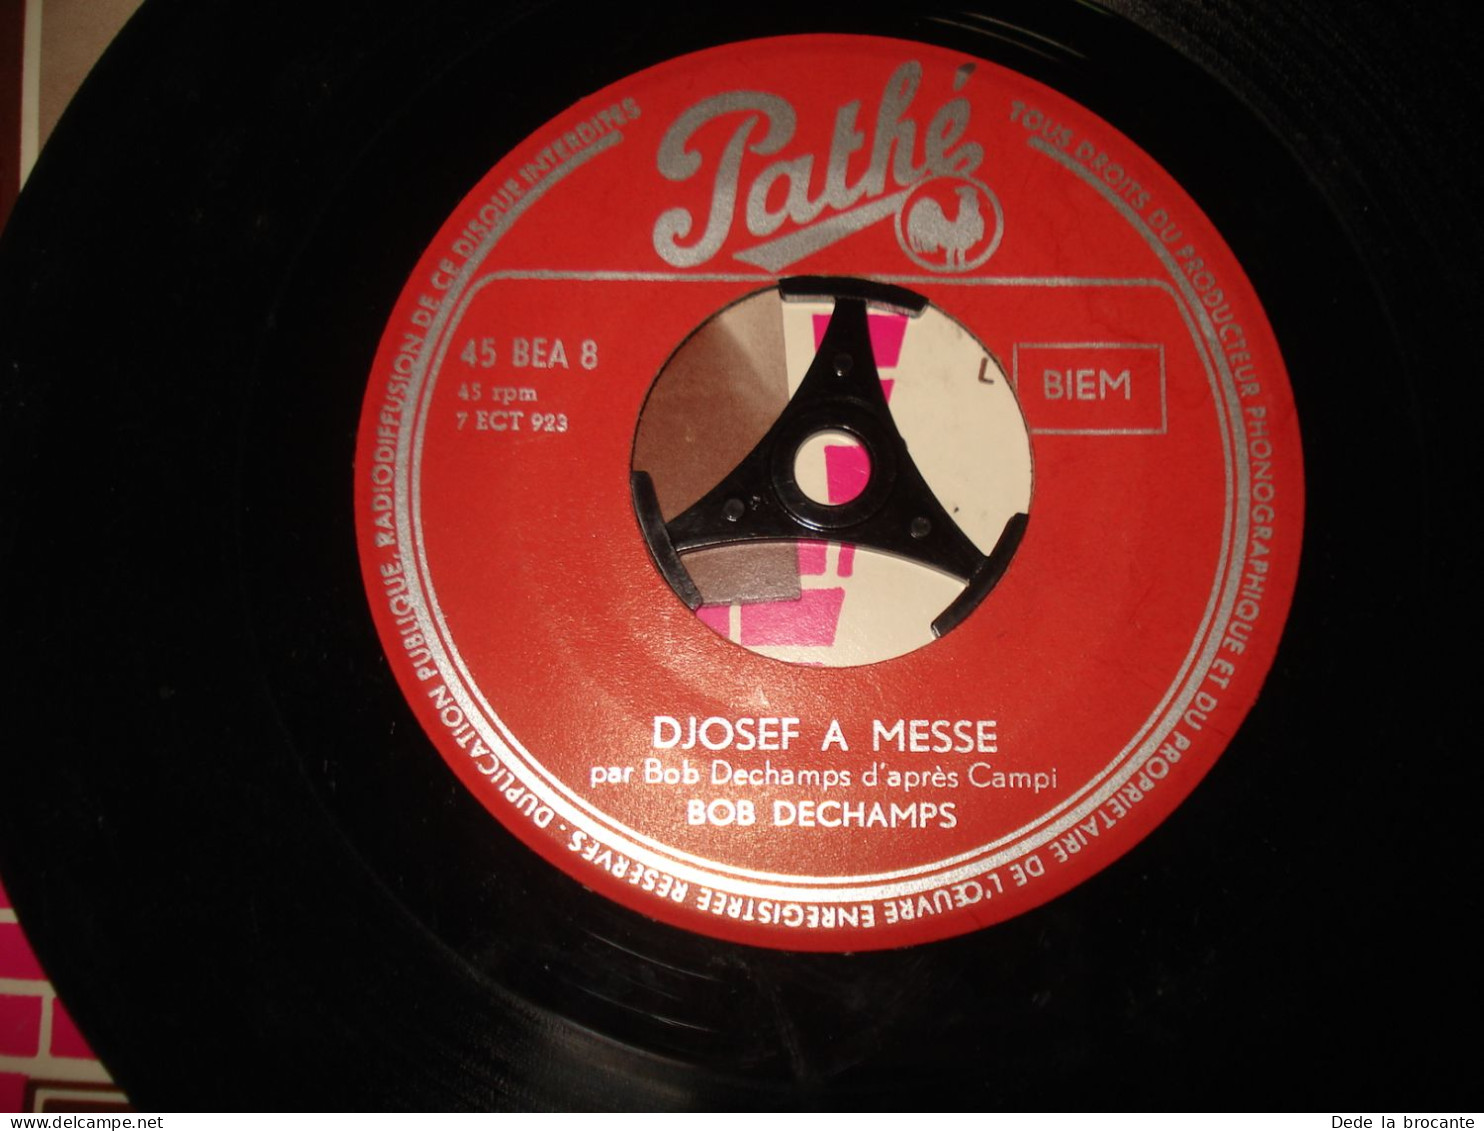 B12 (2) / Bob Dechamps – Djosef A Messe - EP – Pathé – 45 BEA 8 - BE 196?  EX/NM - Comiques, Cabaret